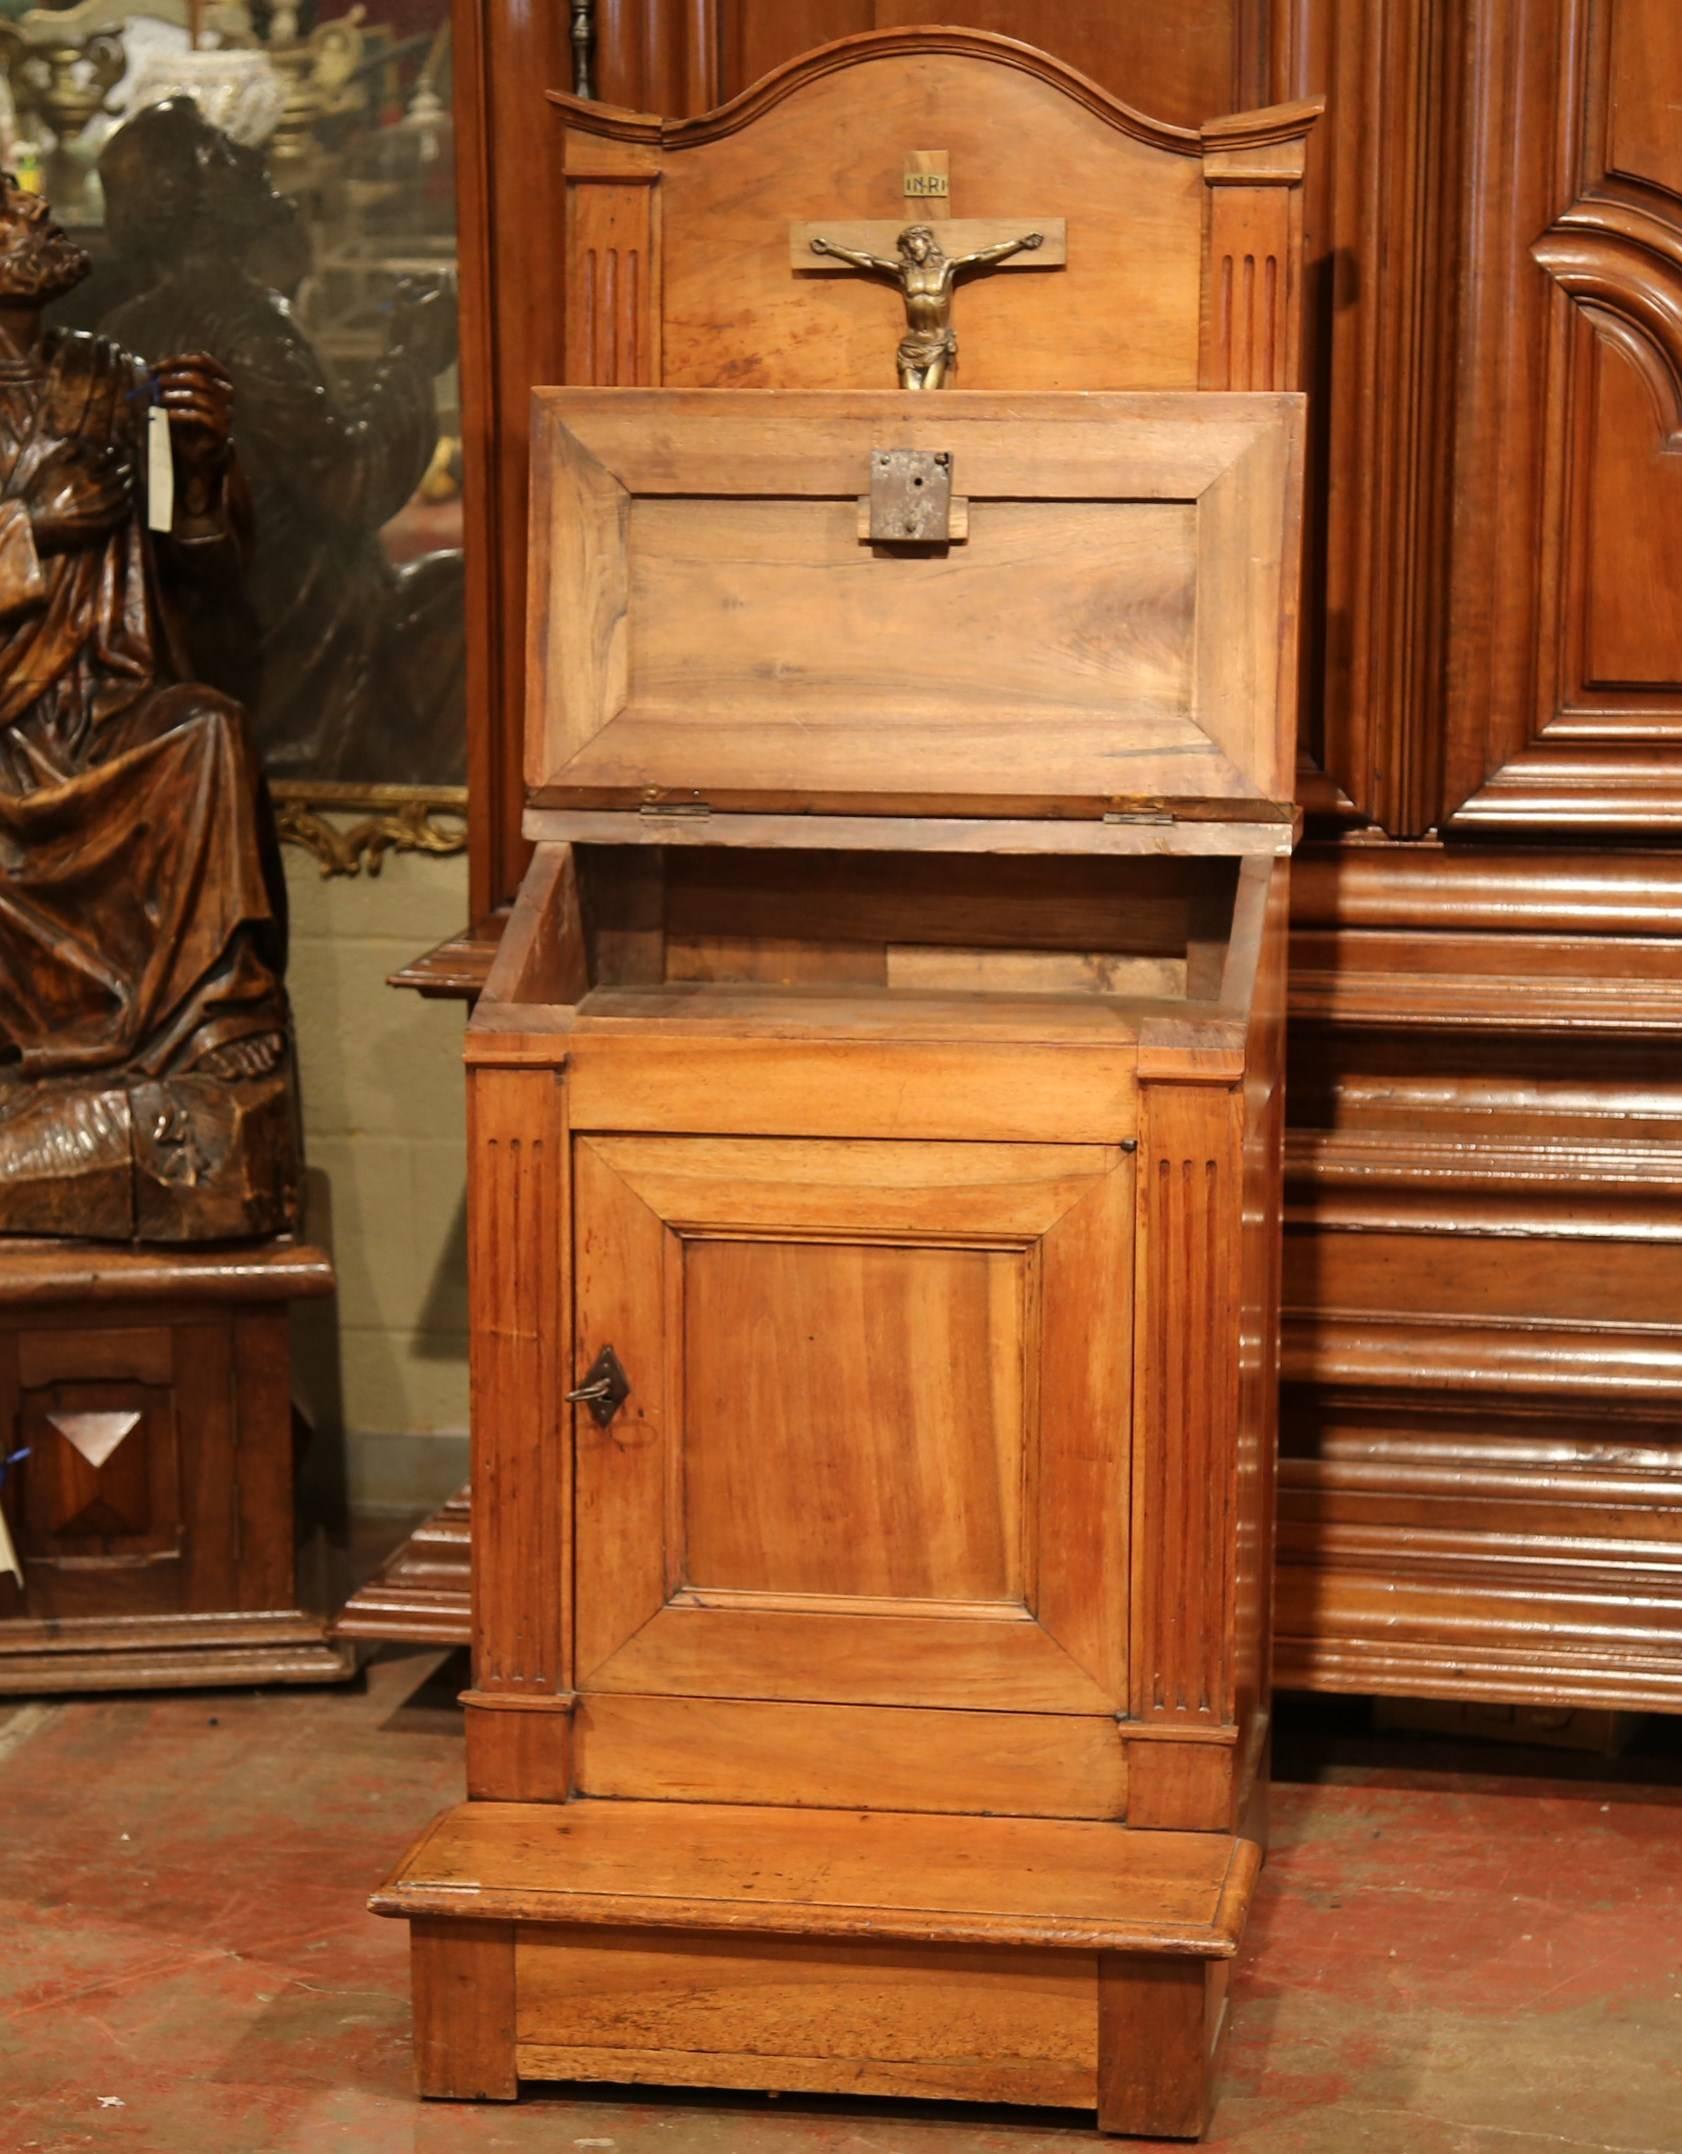 18th Century French Carved Walnut Oratoire Prayer Bench Cabinet from Burgundy (Louis XVI.)